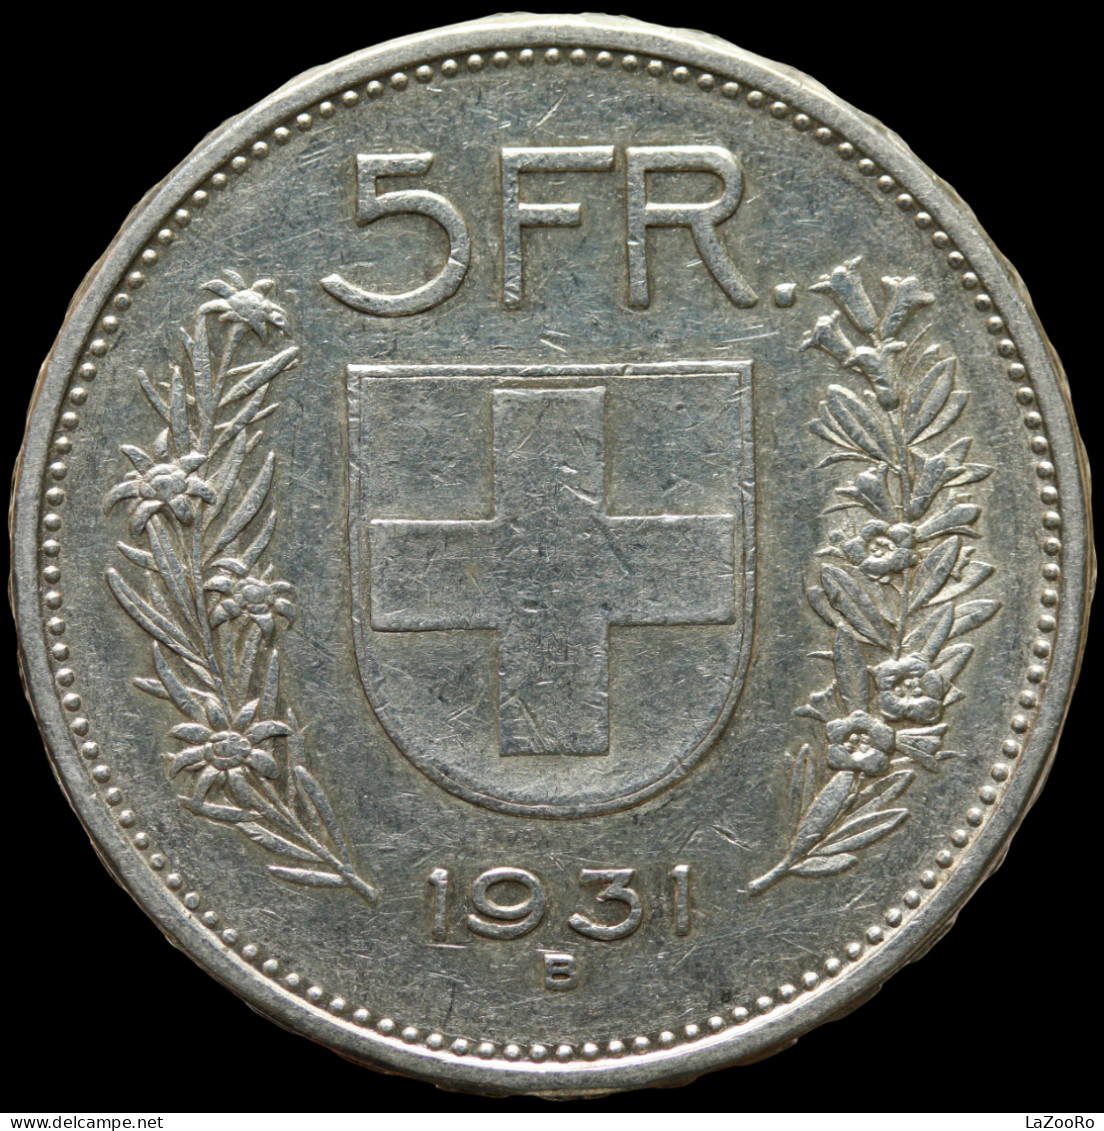 LaZooRo: Switzerland 5 Francs 1931 VF Legend Starts At 11:30 O'clock - Silver - 5 Francs